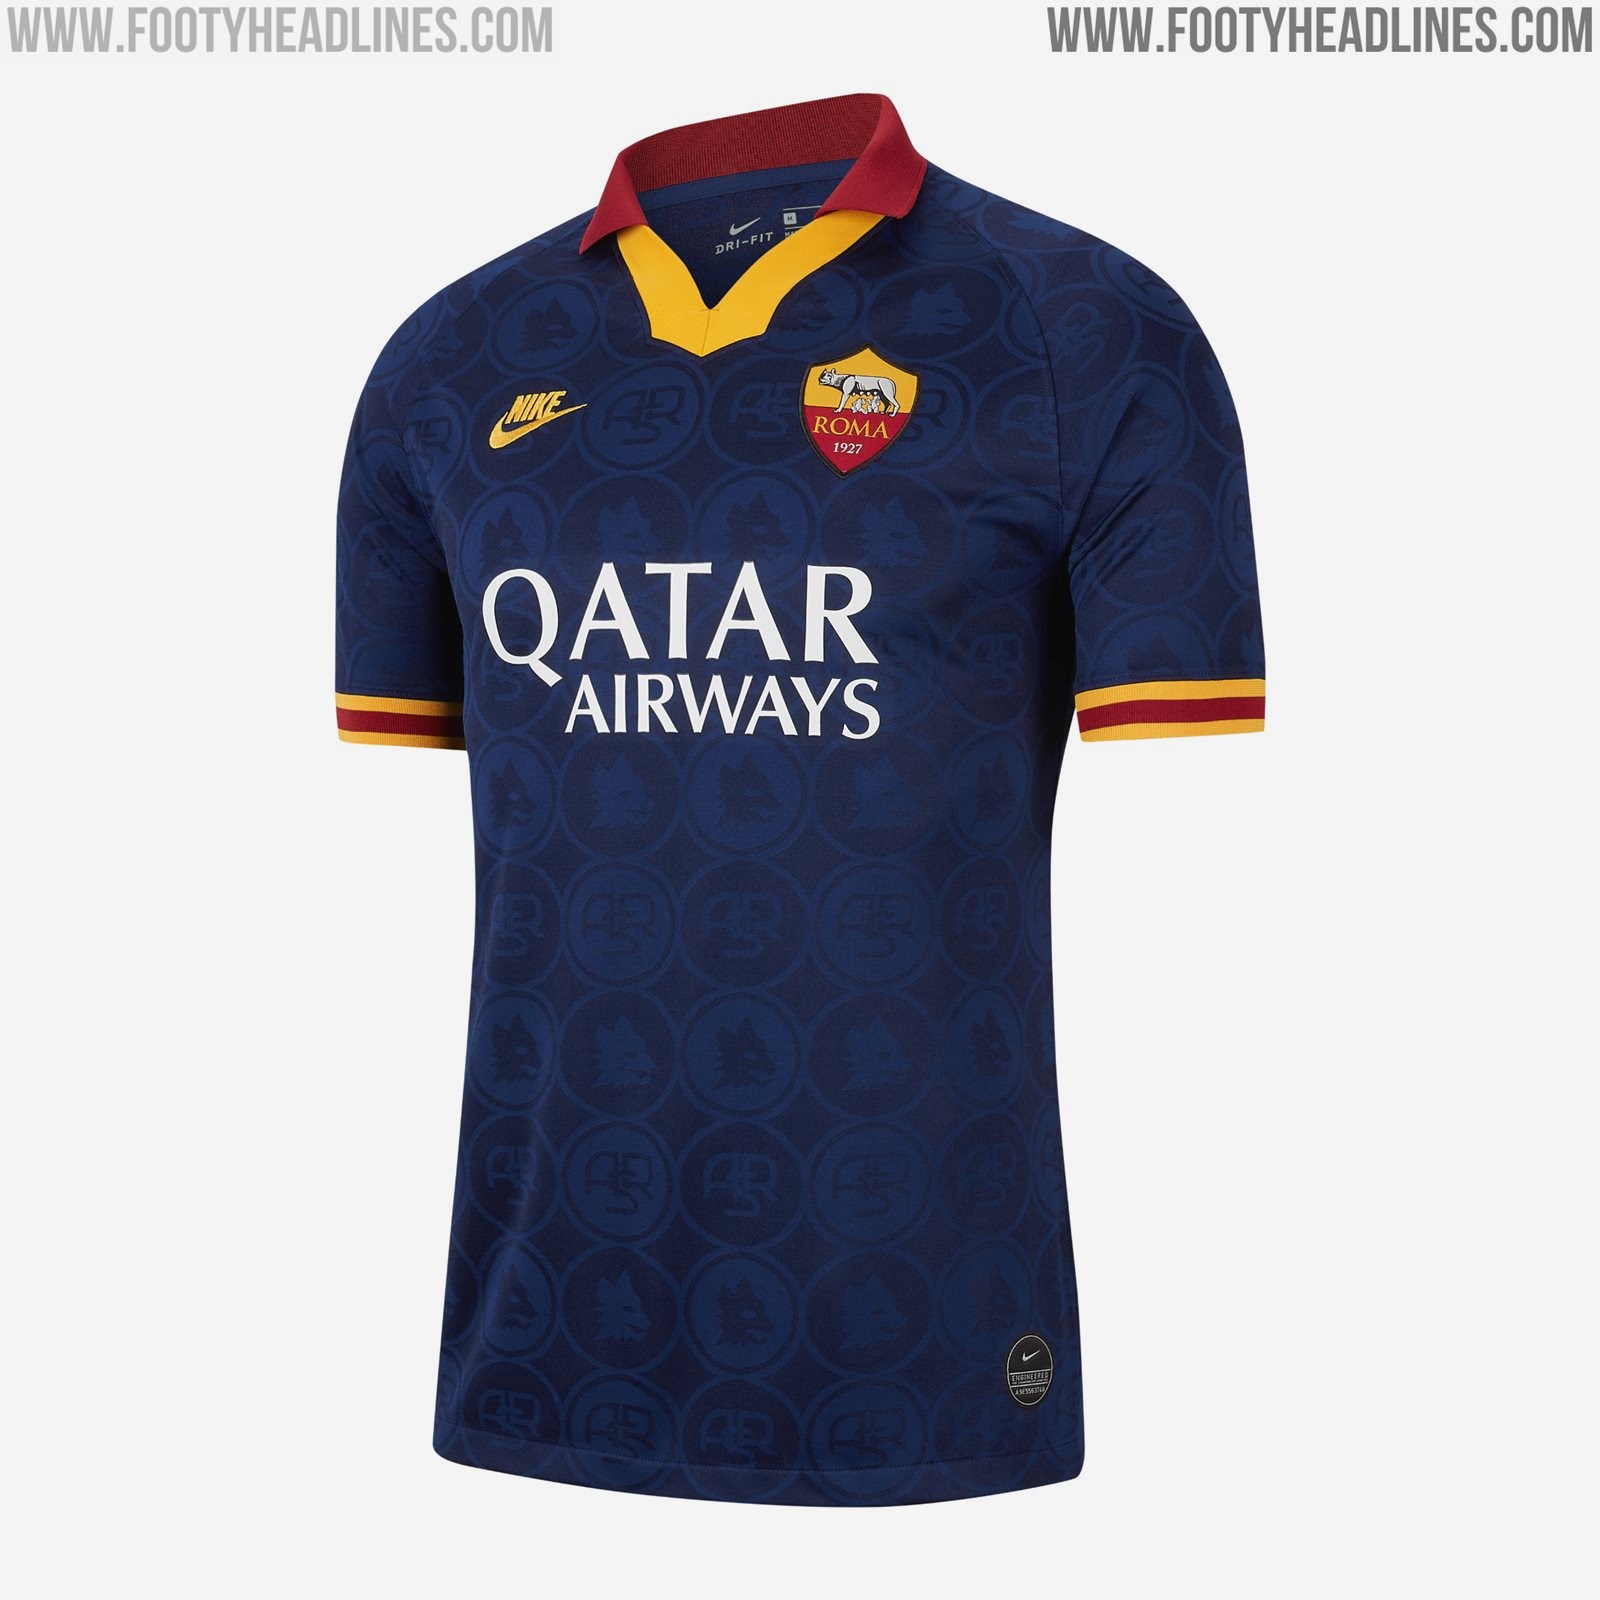 Full Nike AS Roma Kit History - End After 7 Seasons & 22 Kits